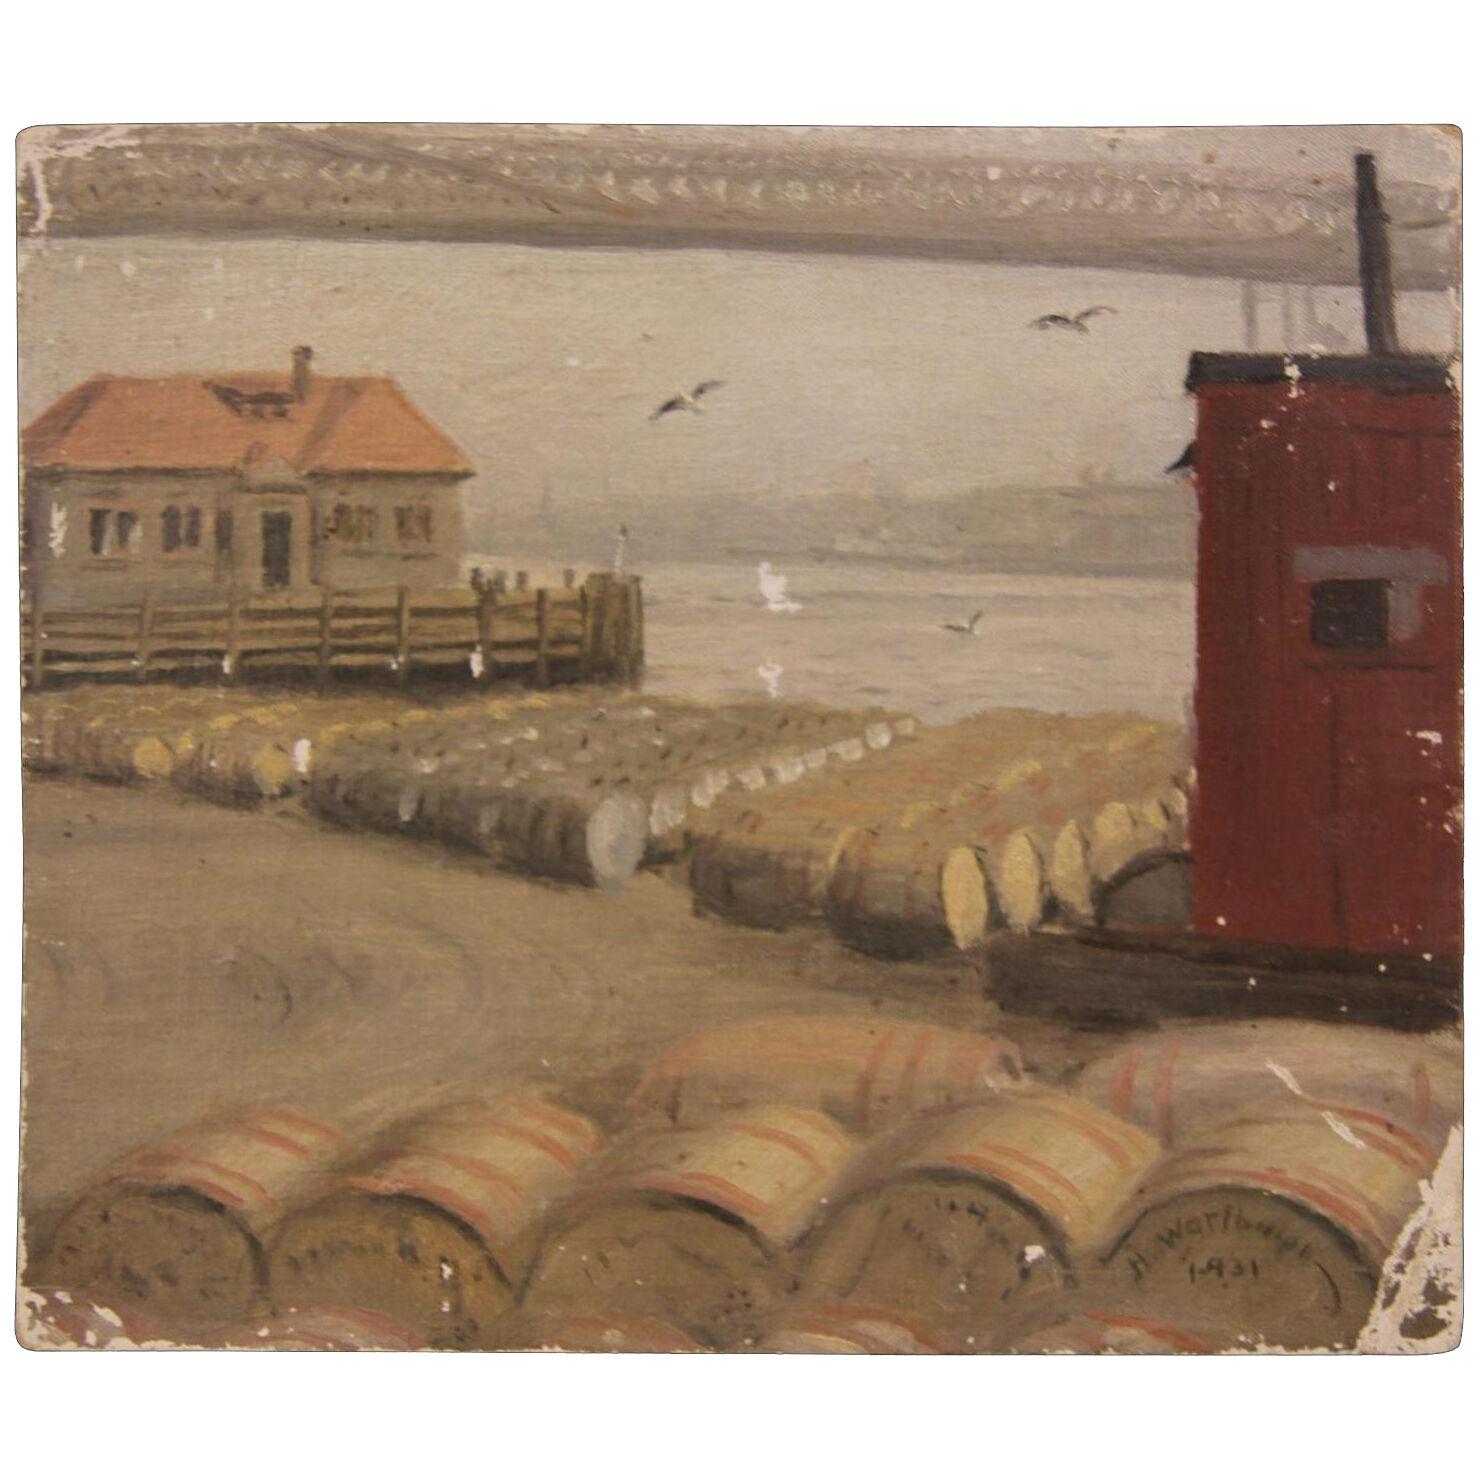 Harry Worthman "Barrels" Naturalistic Early Seascape Painting 1931